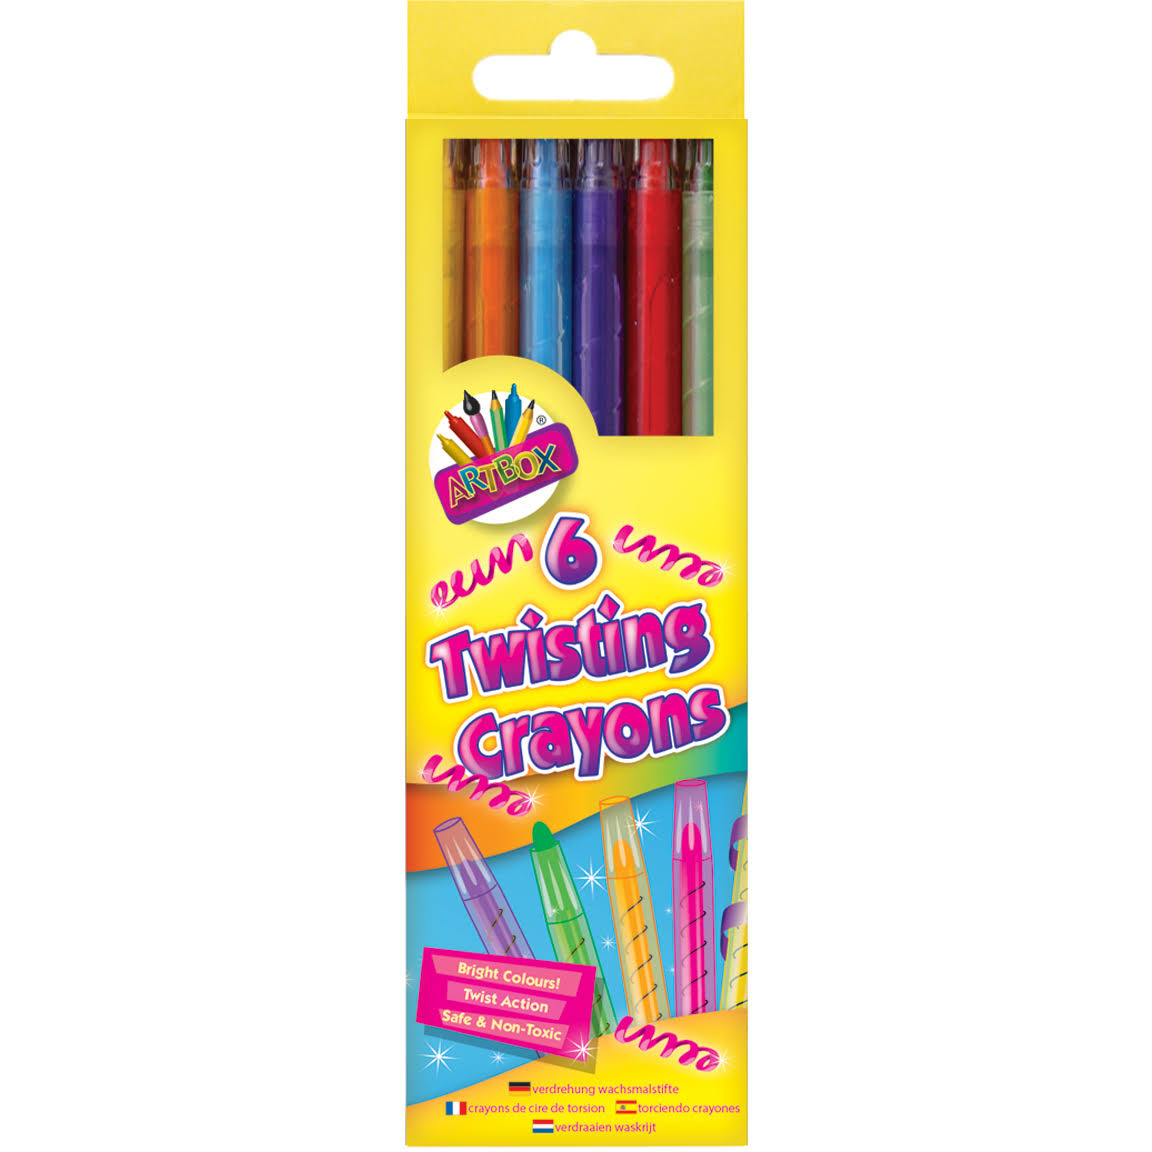 6 Twisting Crayons Pack